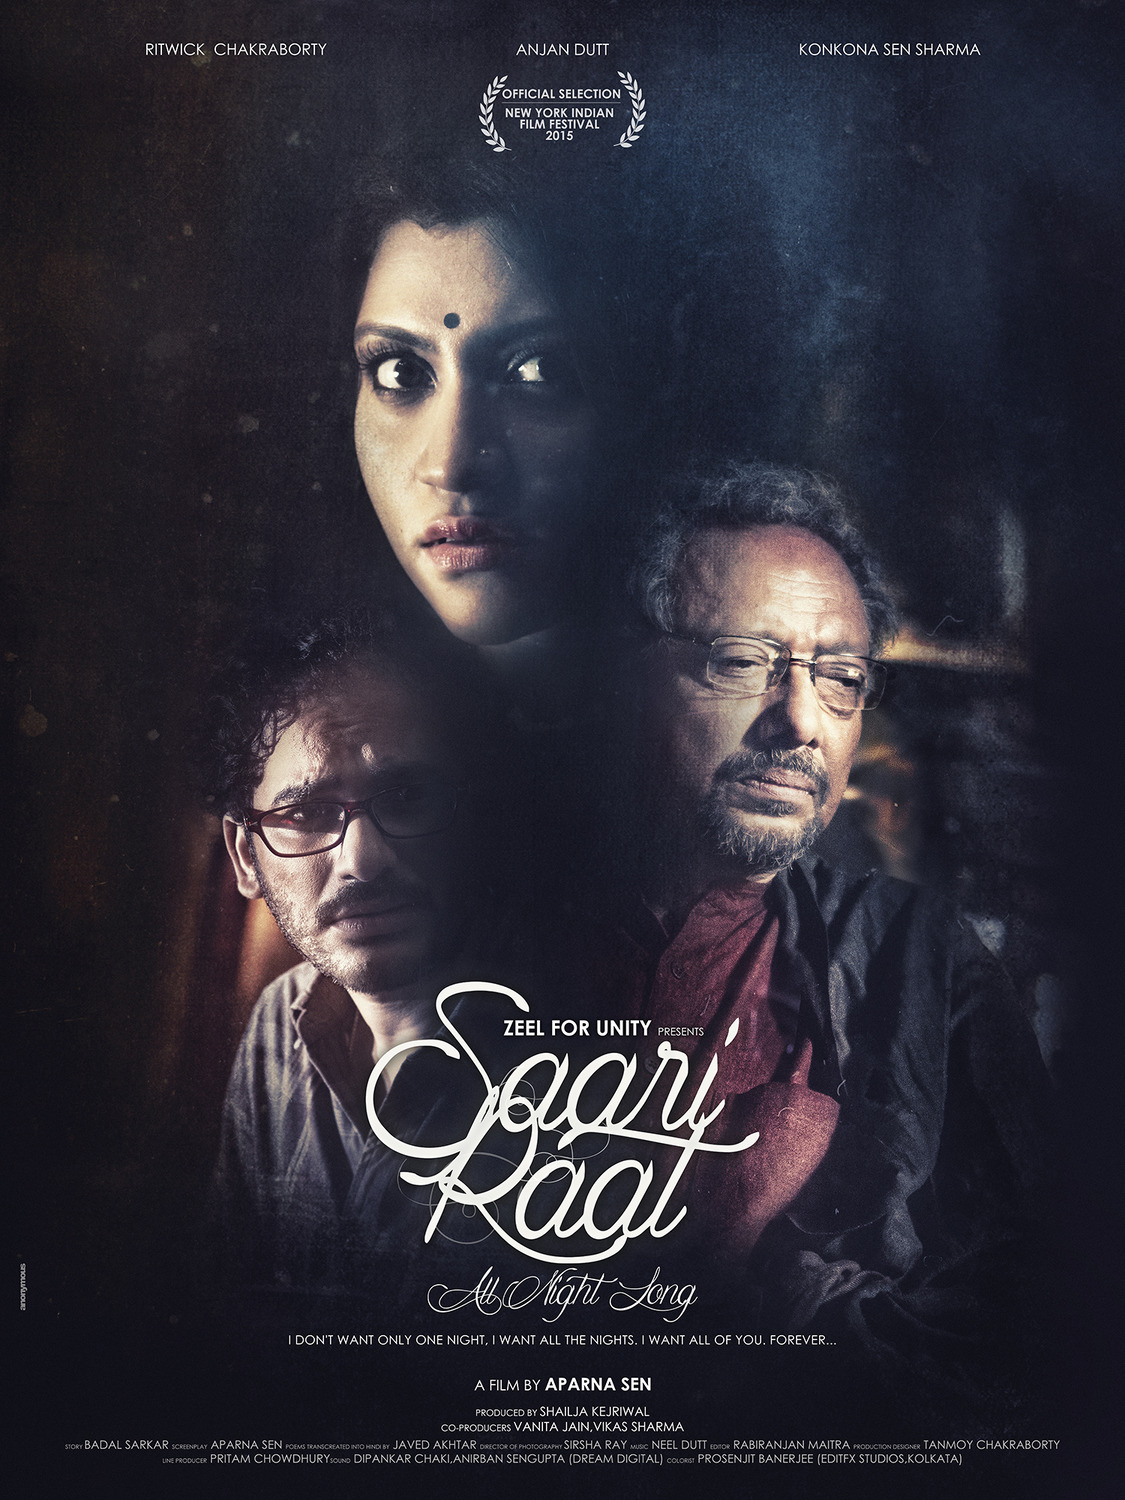 Extra Large Movie Poster Image for Saari Raat (#1 of 2)